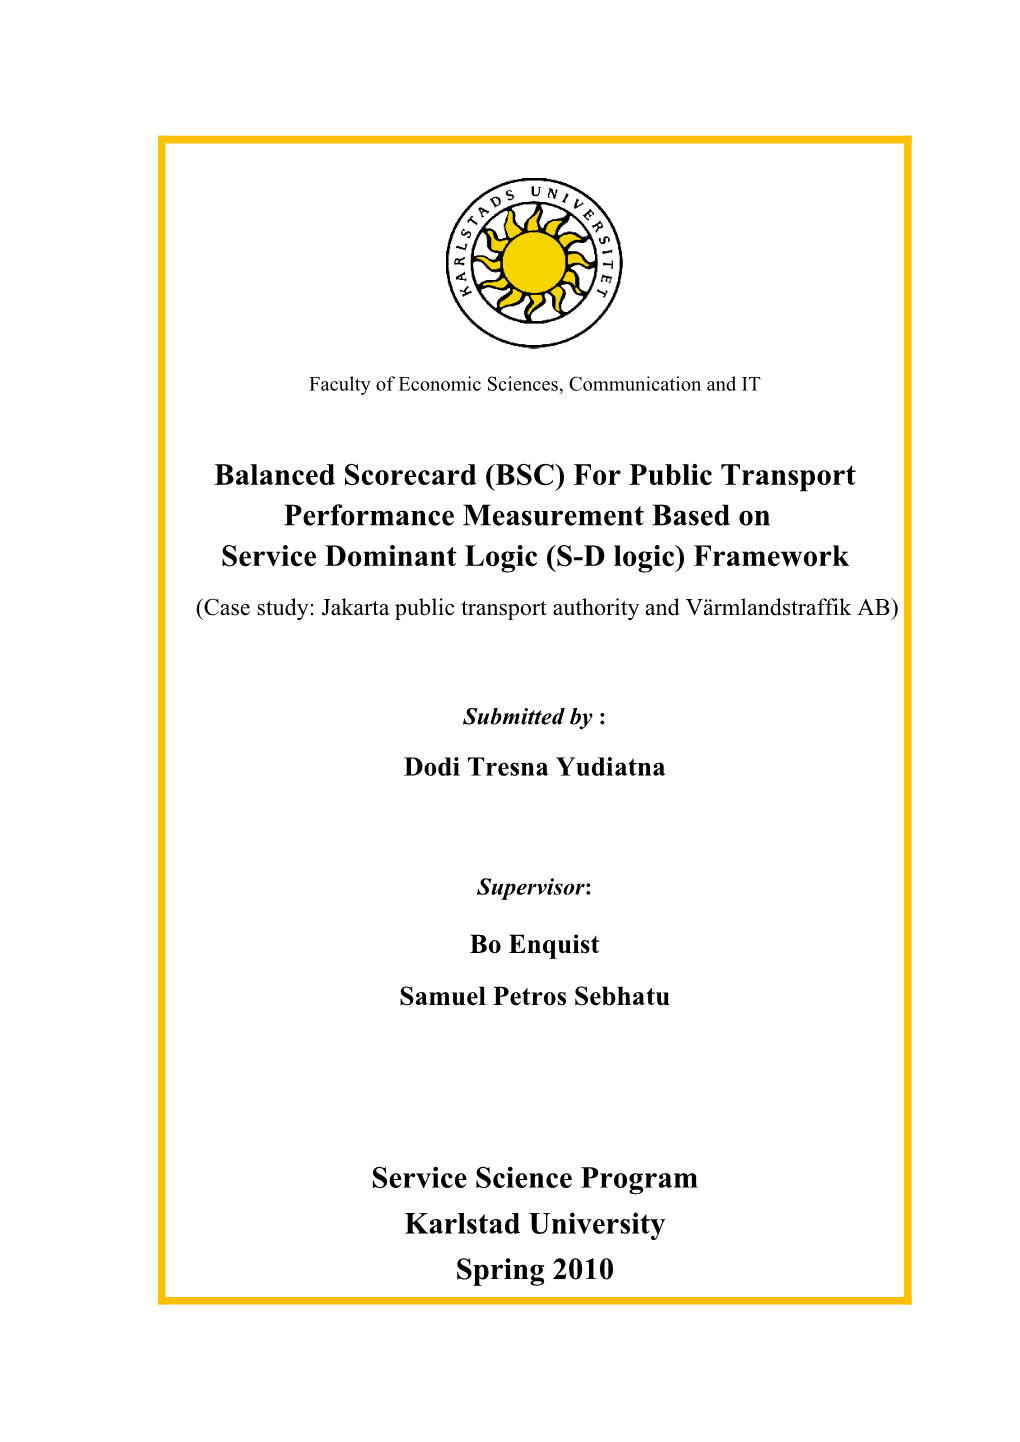 Balanced Scorecard (BSC) for Public Transport Performance